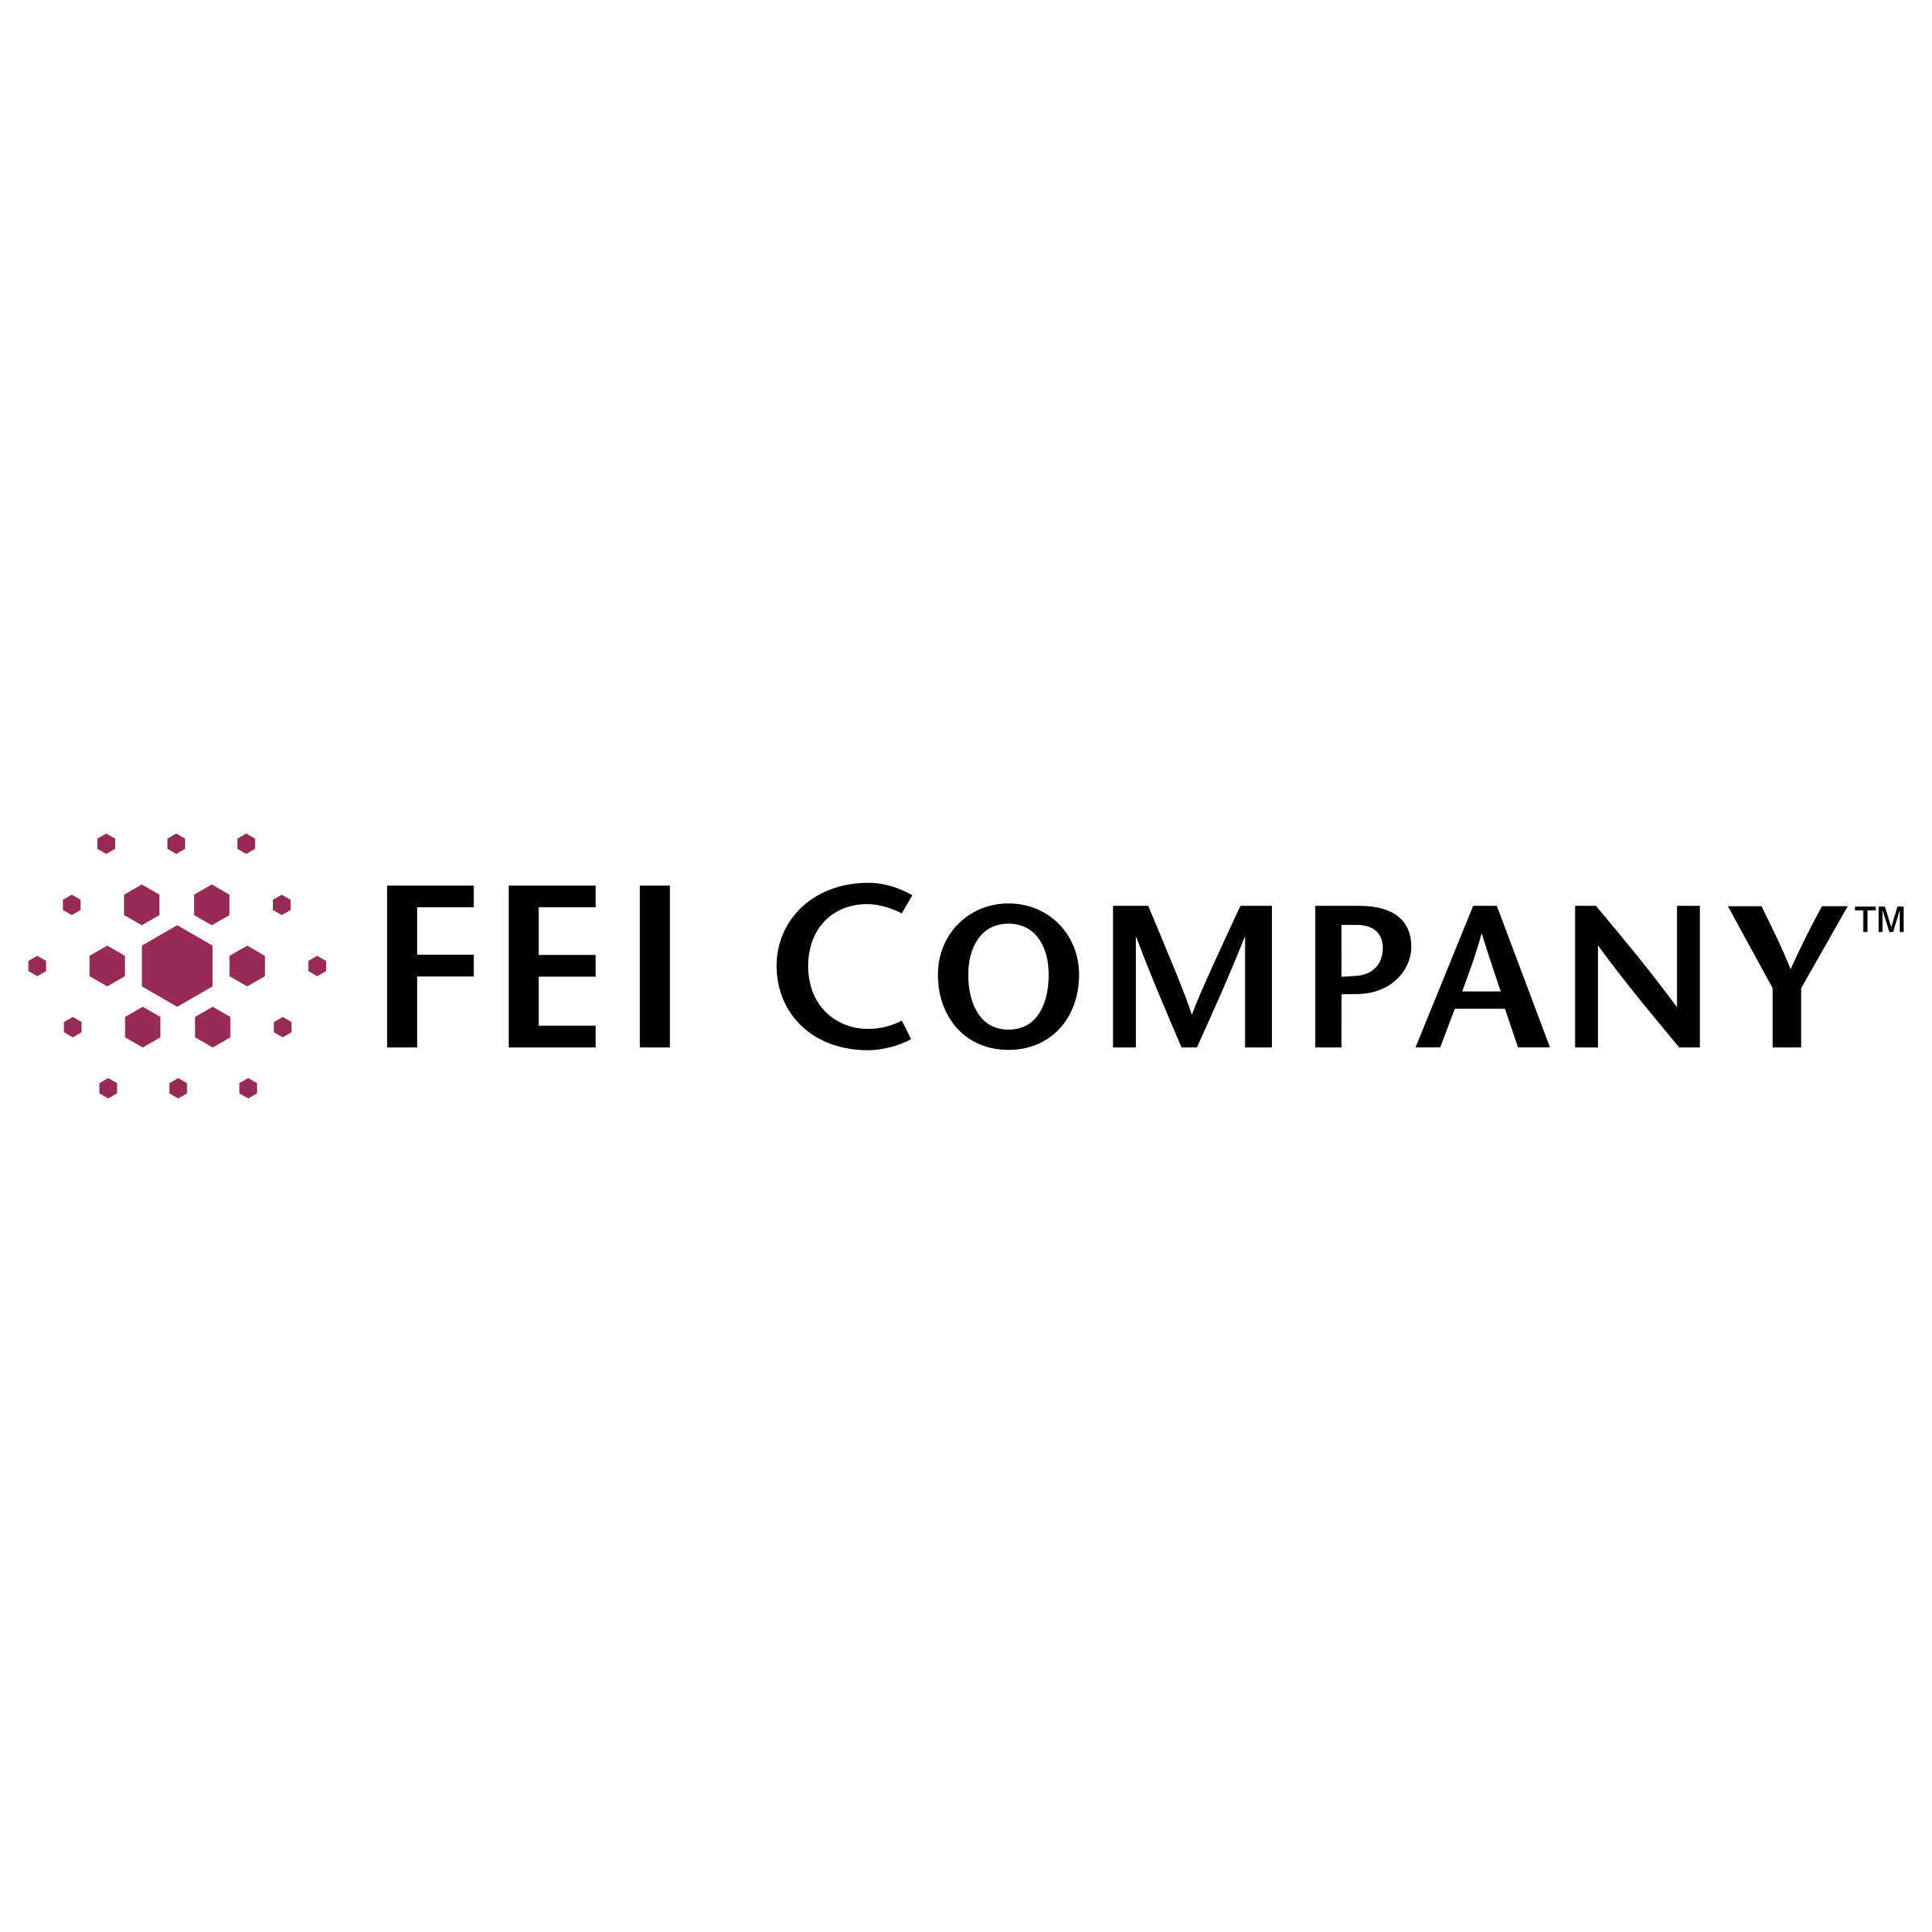 Fei Logo - FEI Company Logo PNG Transparent & SVG Vector - Freebie Supply